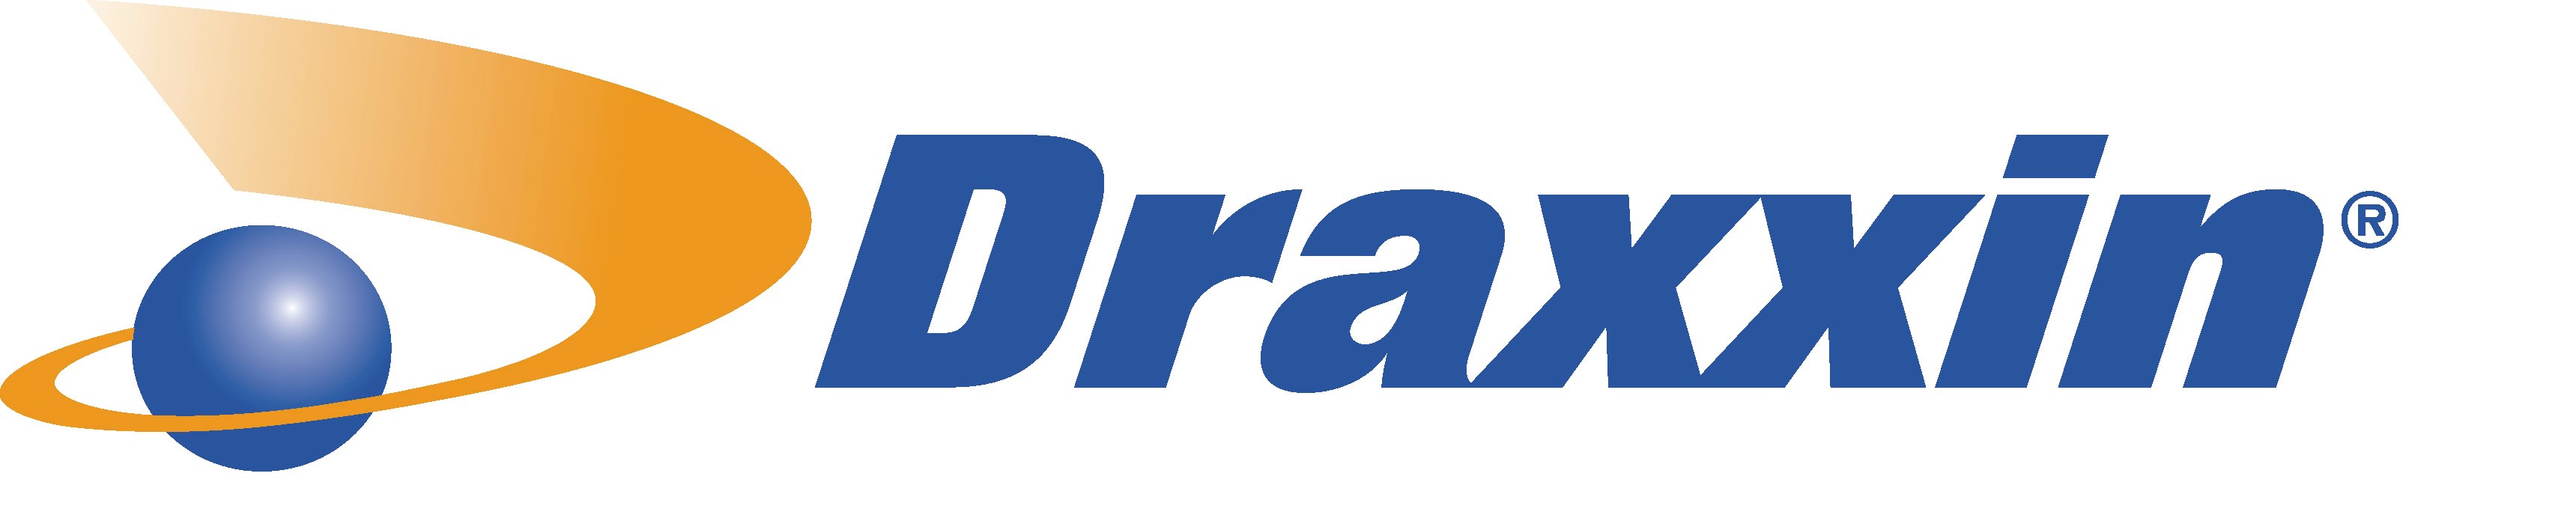 Draxxin logo